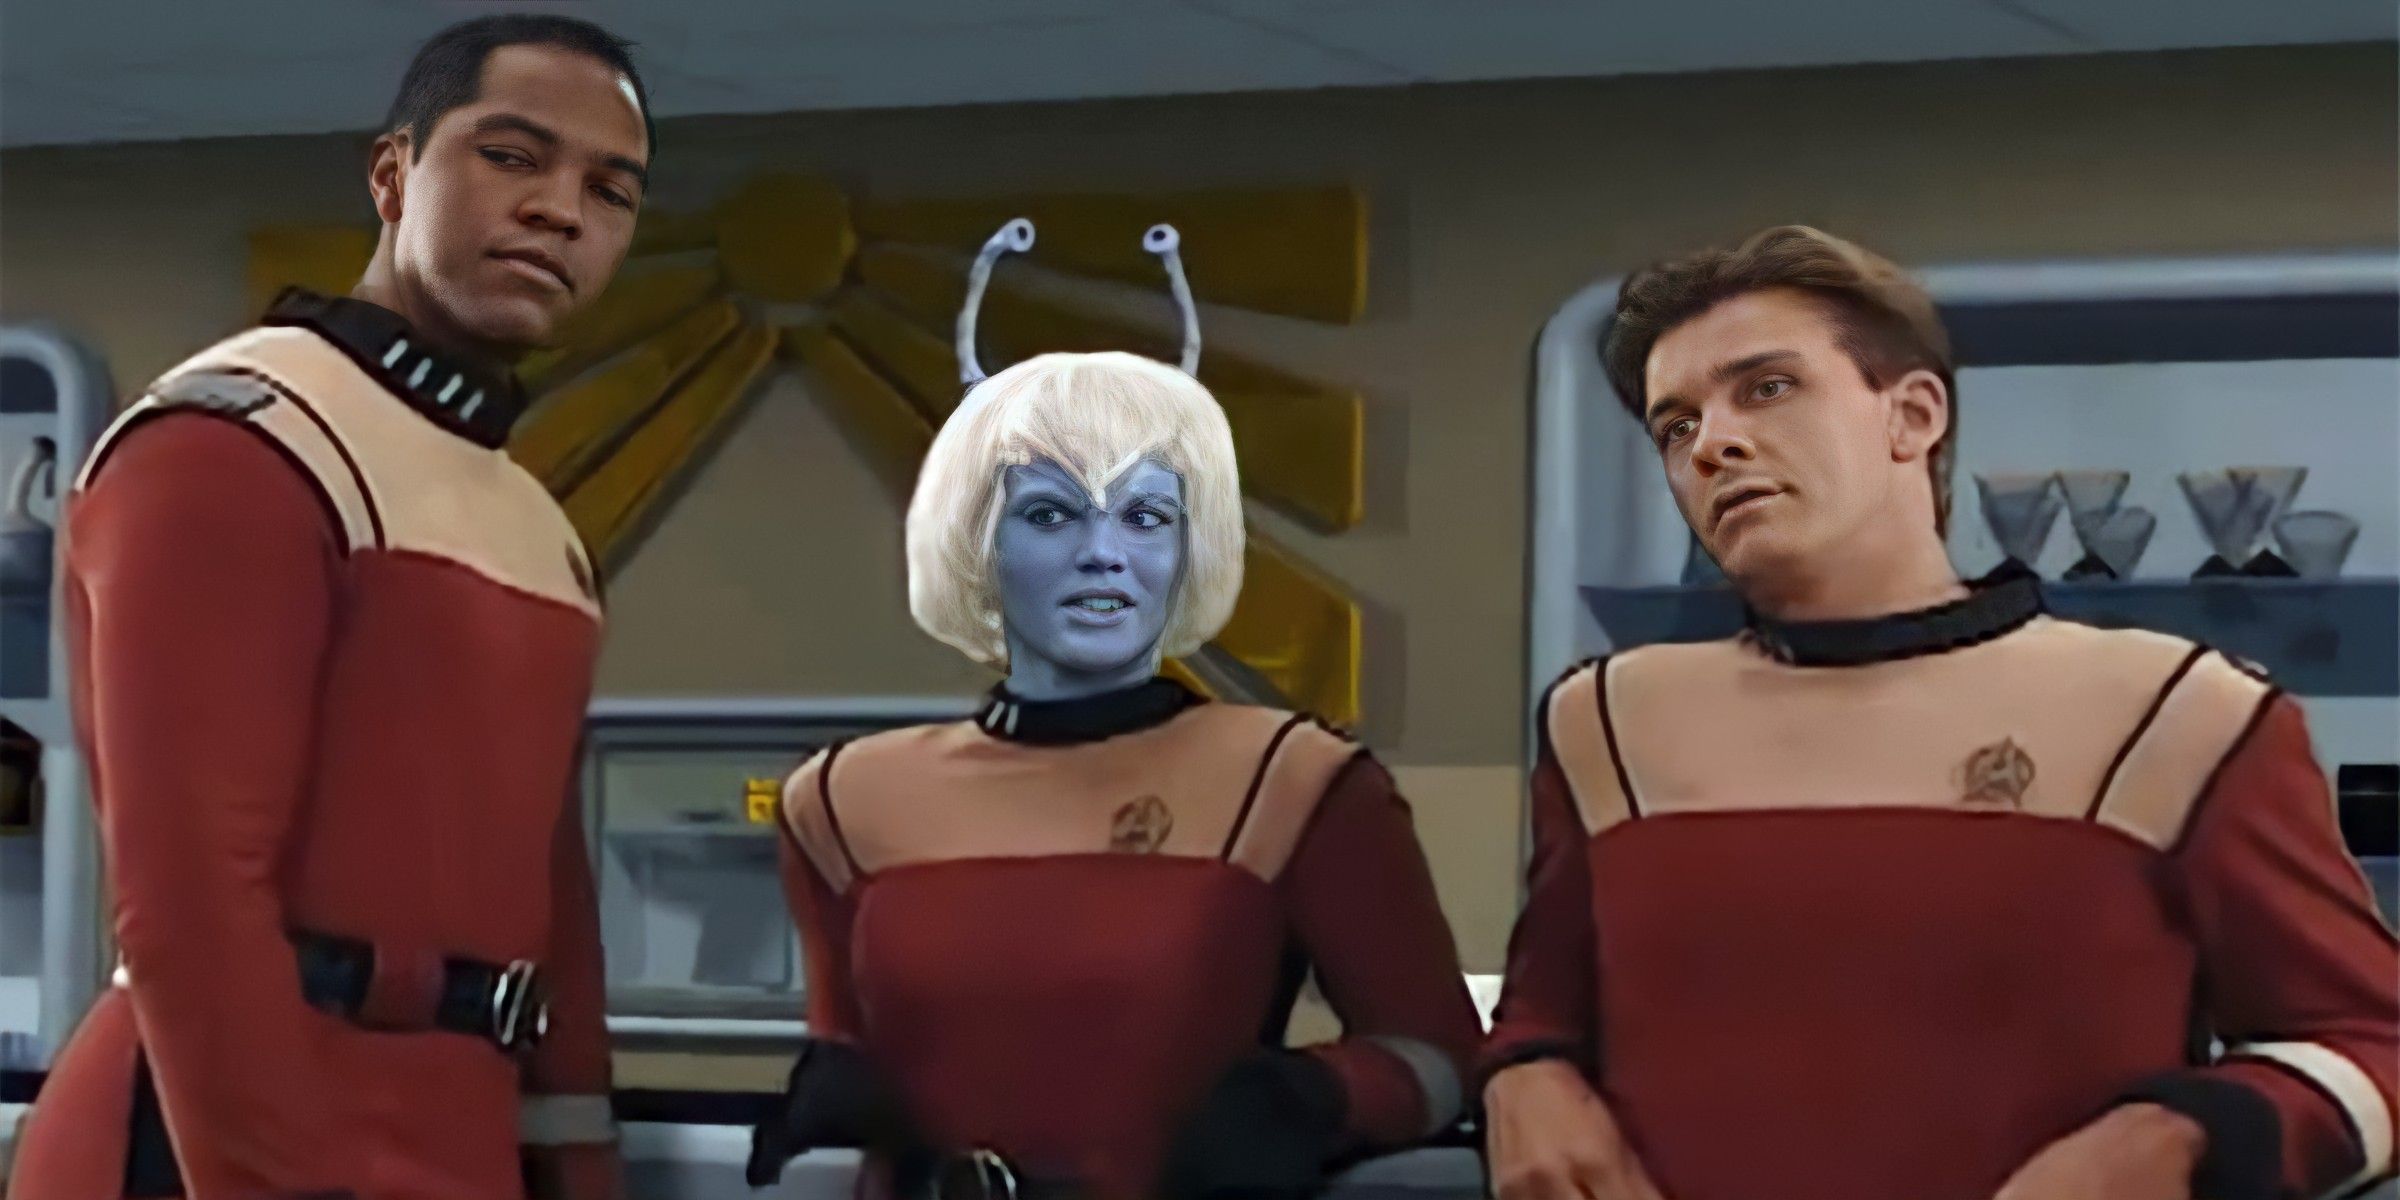 Students at Star Trek's Starfleet Academy look ahead uninterested